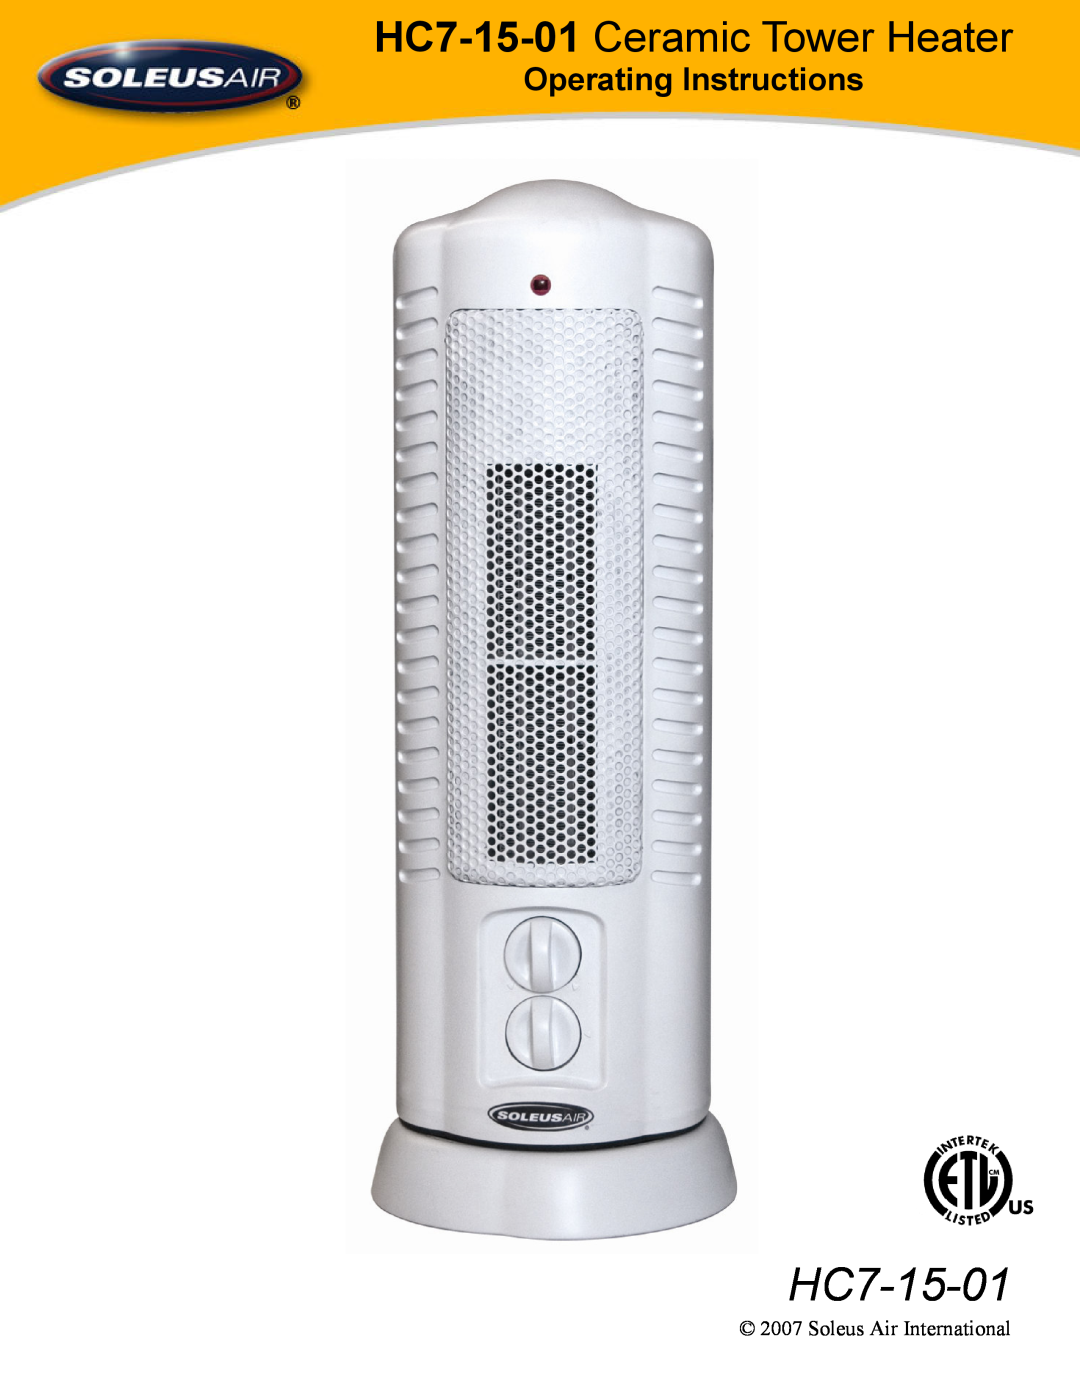 Soleus Air manual HC7-15-01 Ceramic Tower Heater, Operating Instructions 